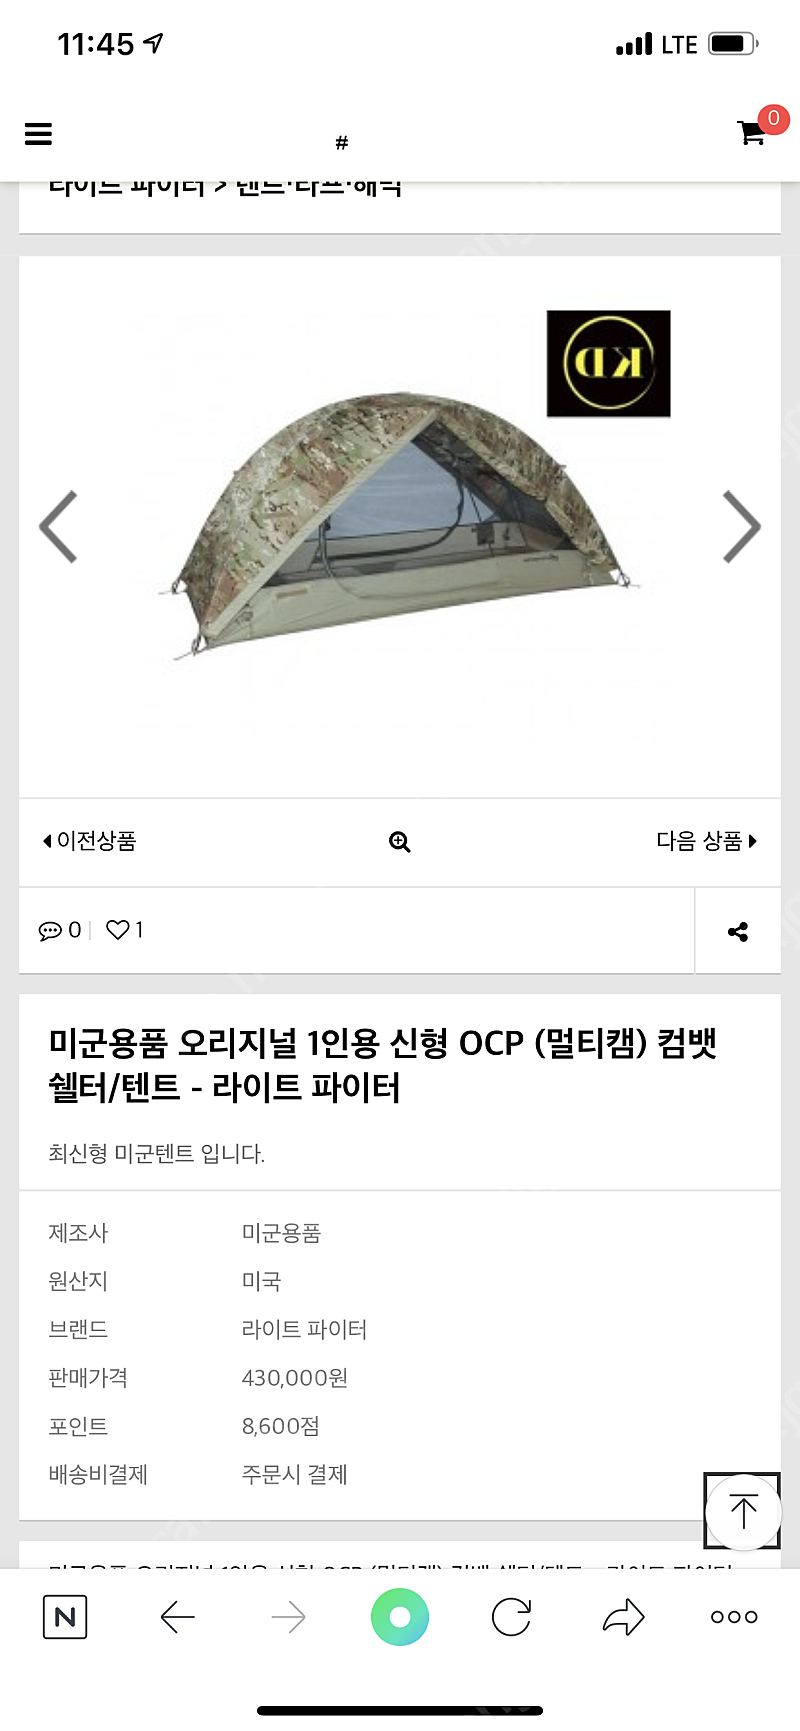 Ocp 1인용멀티캠 텐트 판매합니다